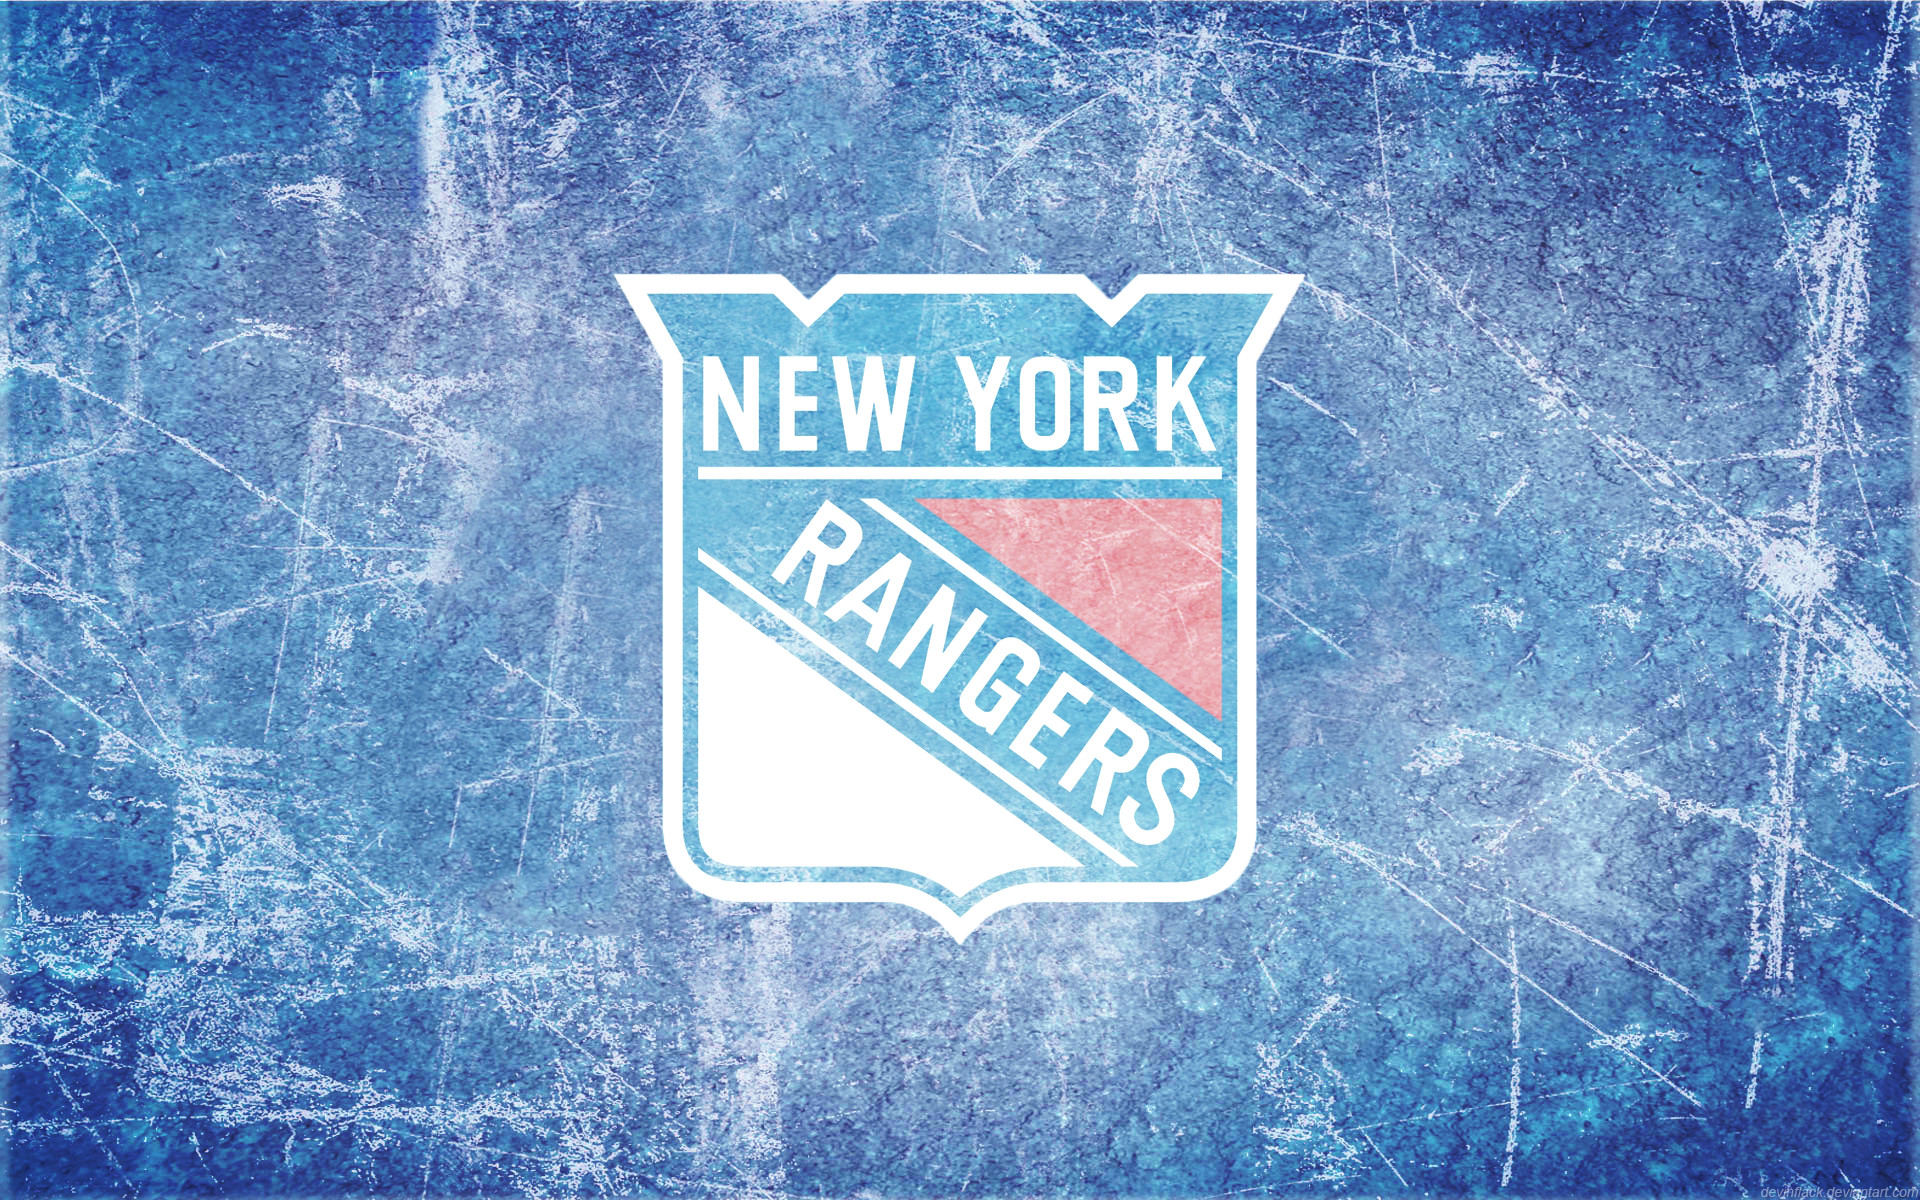 NY Rangers Wallpaper (72+ images)